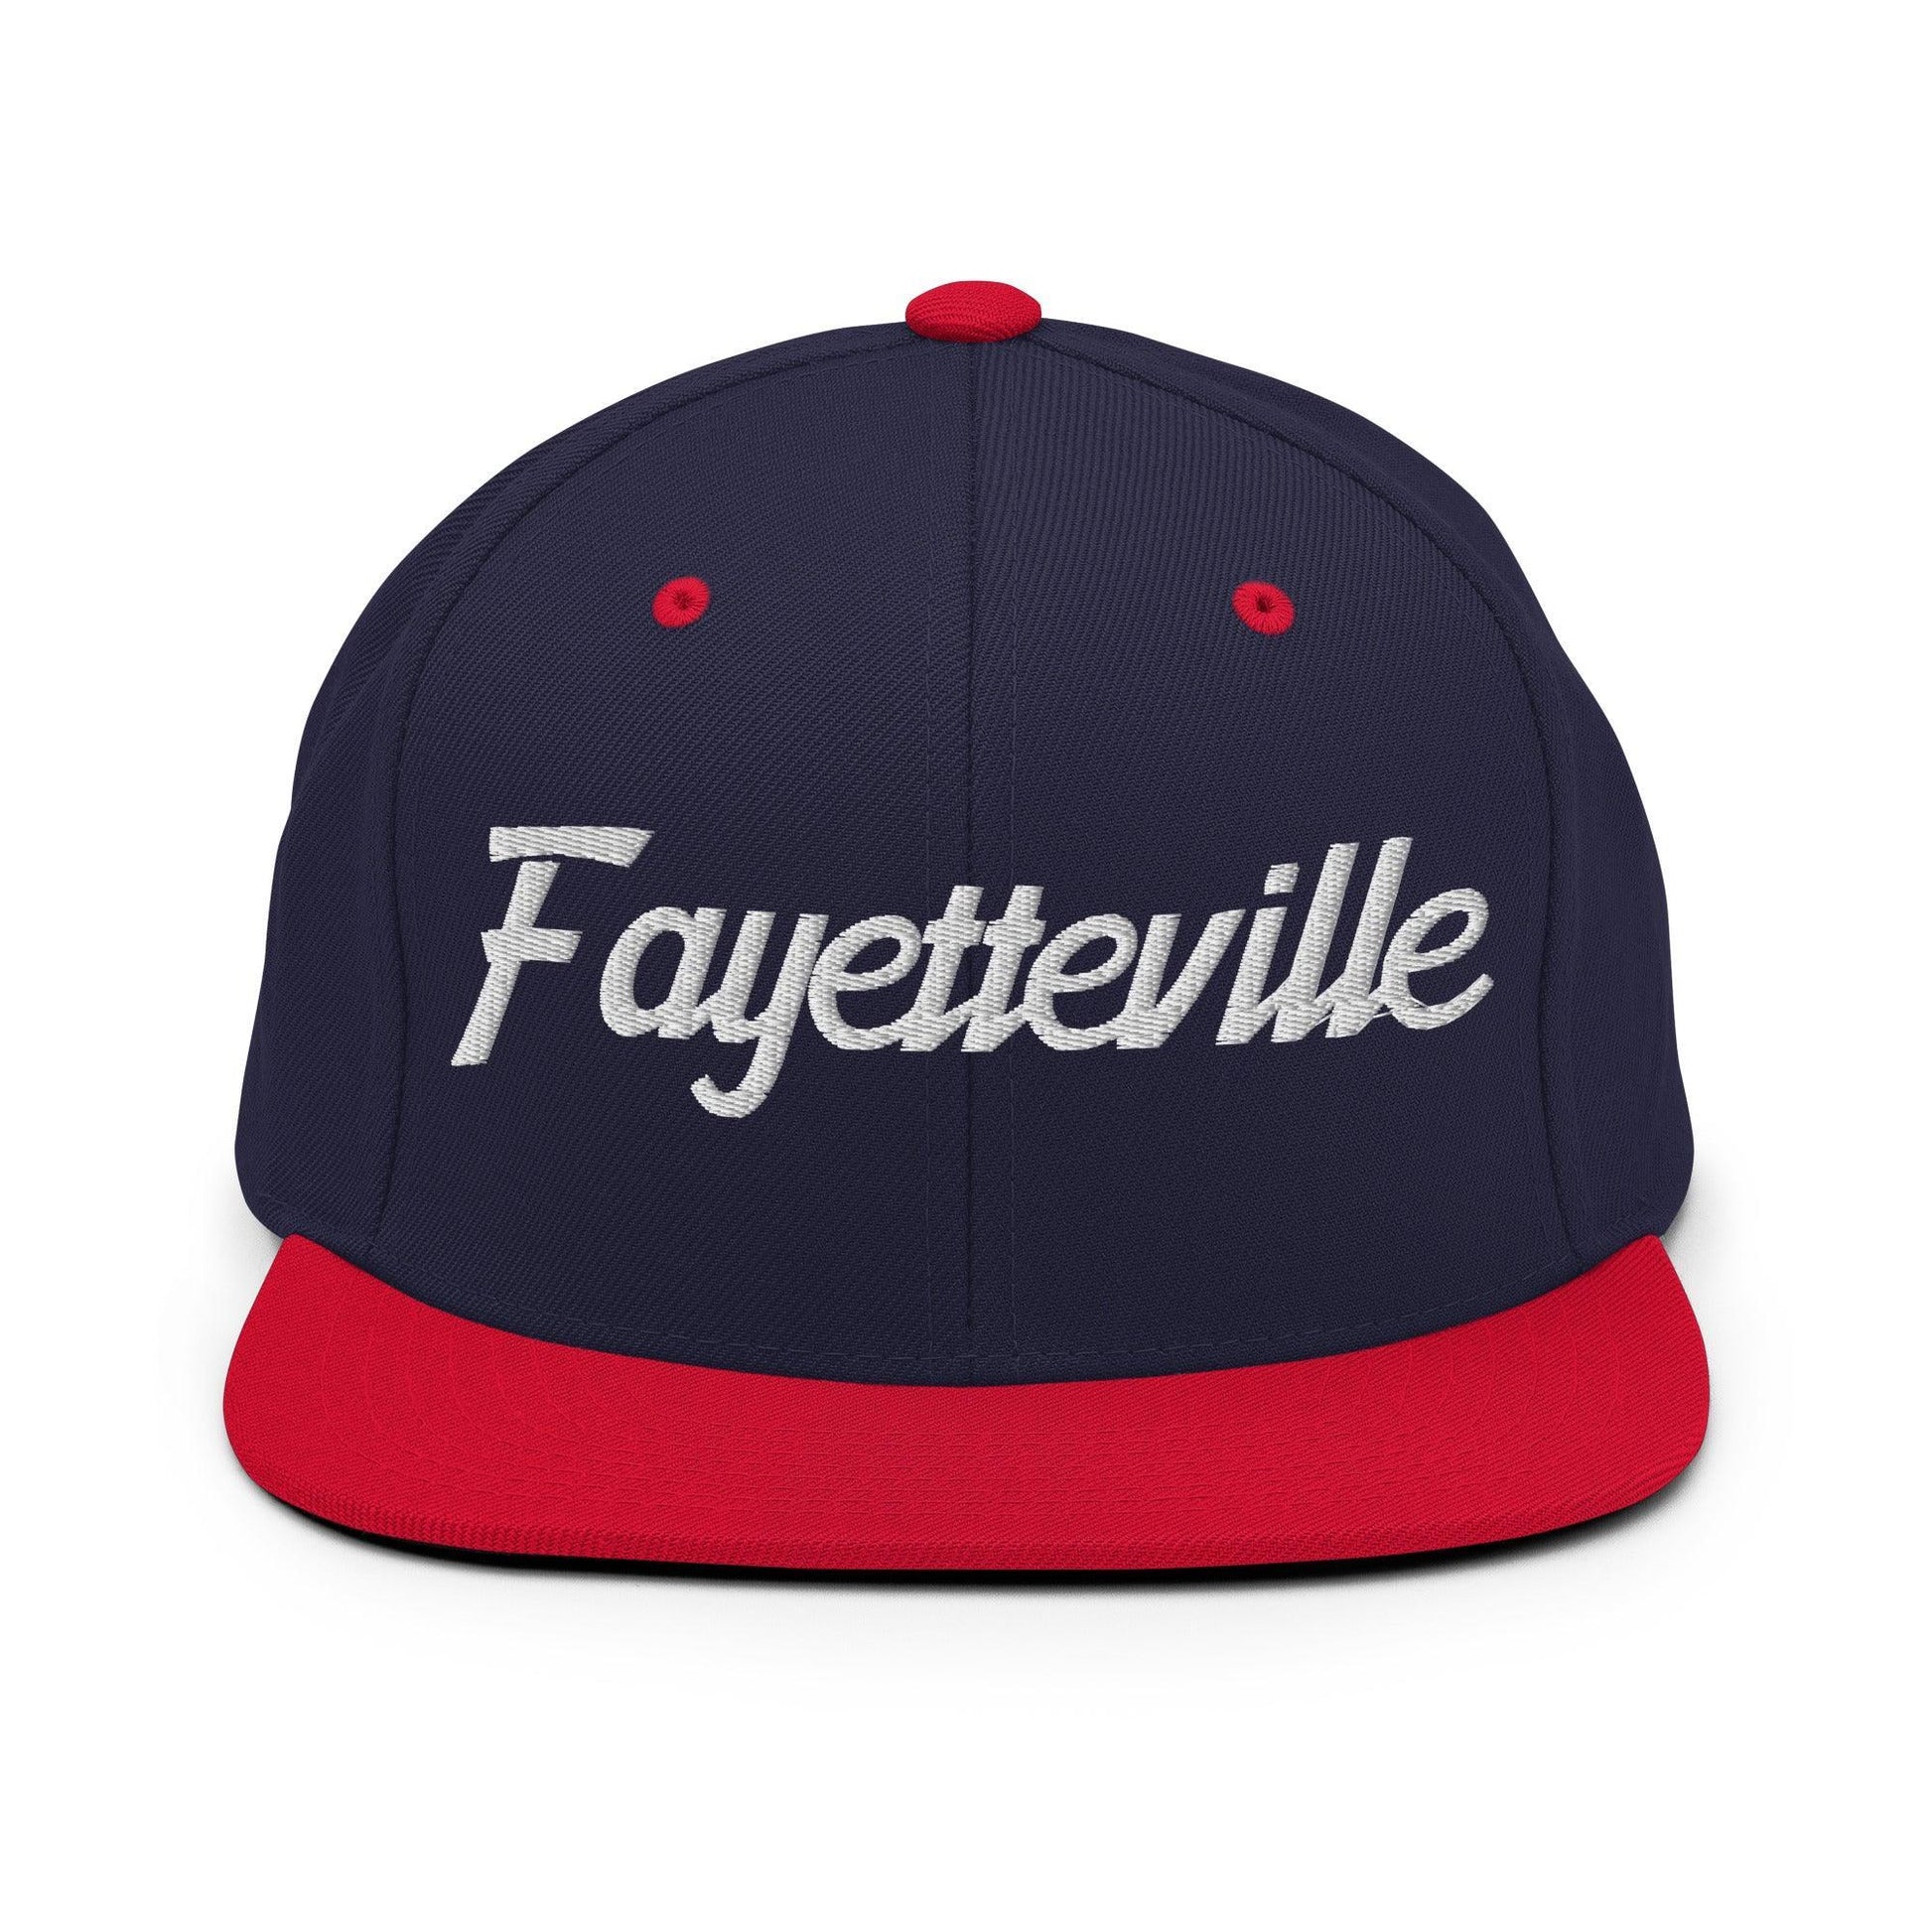 Fayetteville Script Snapback Hat Navy/ Red